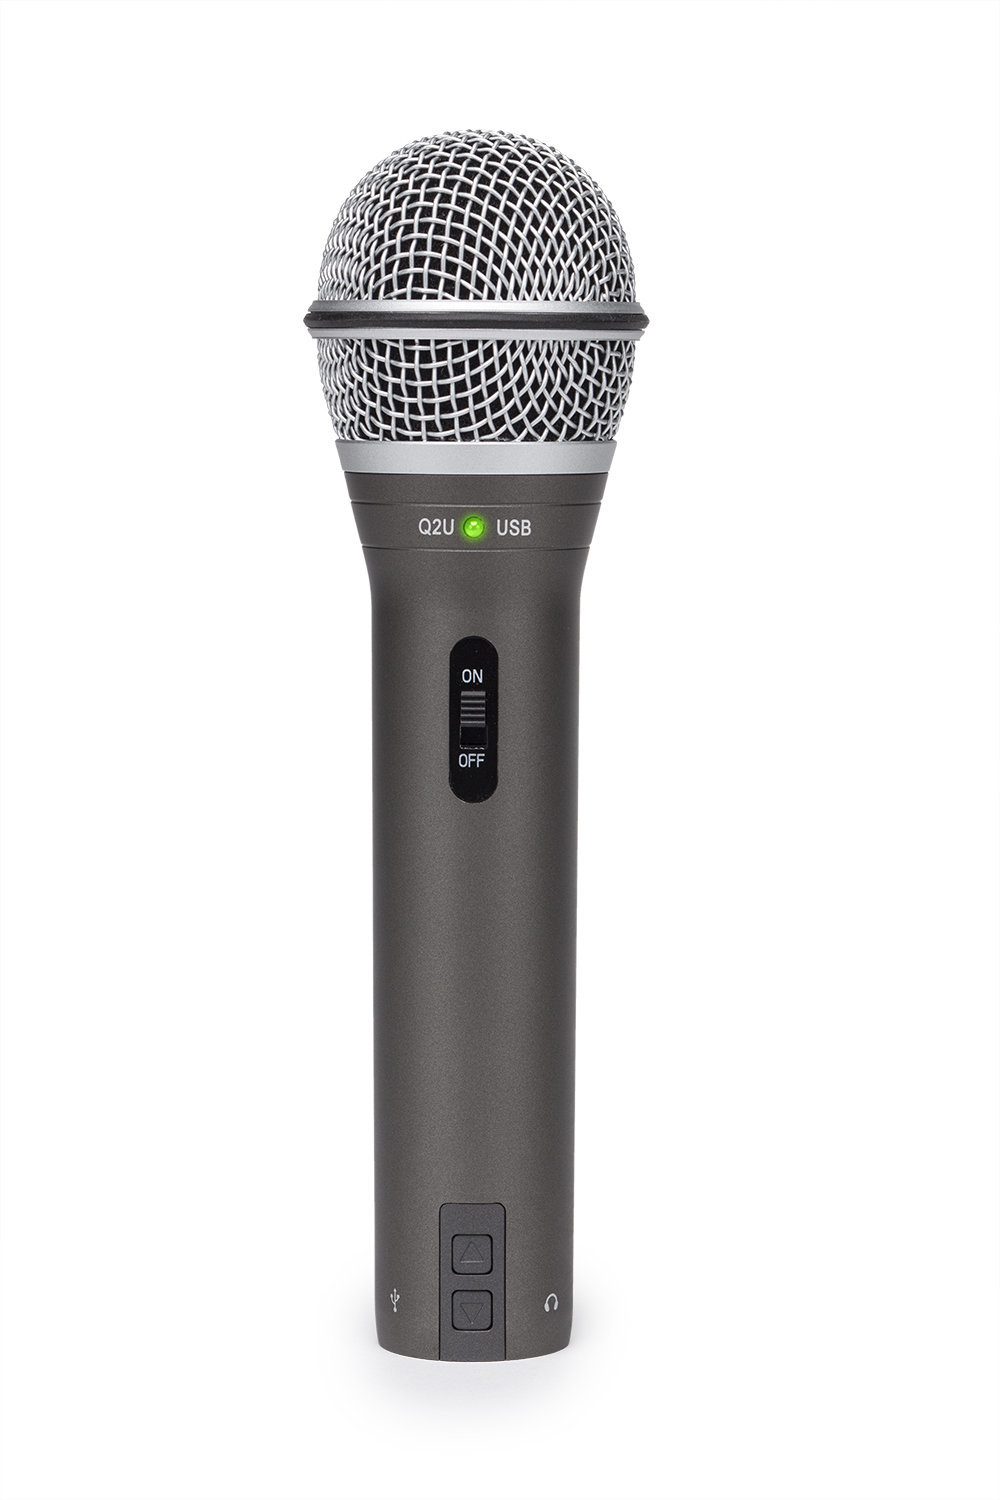 Samson Q2U 2017 Vokální dynamický mikrofon Samson